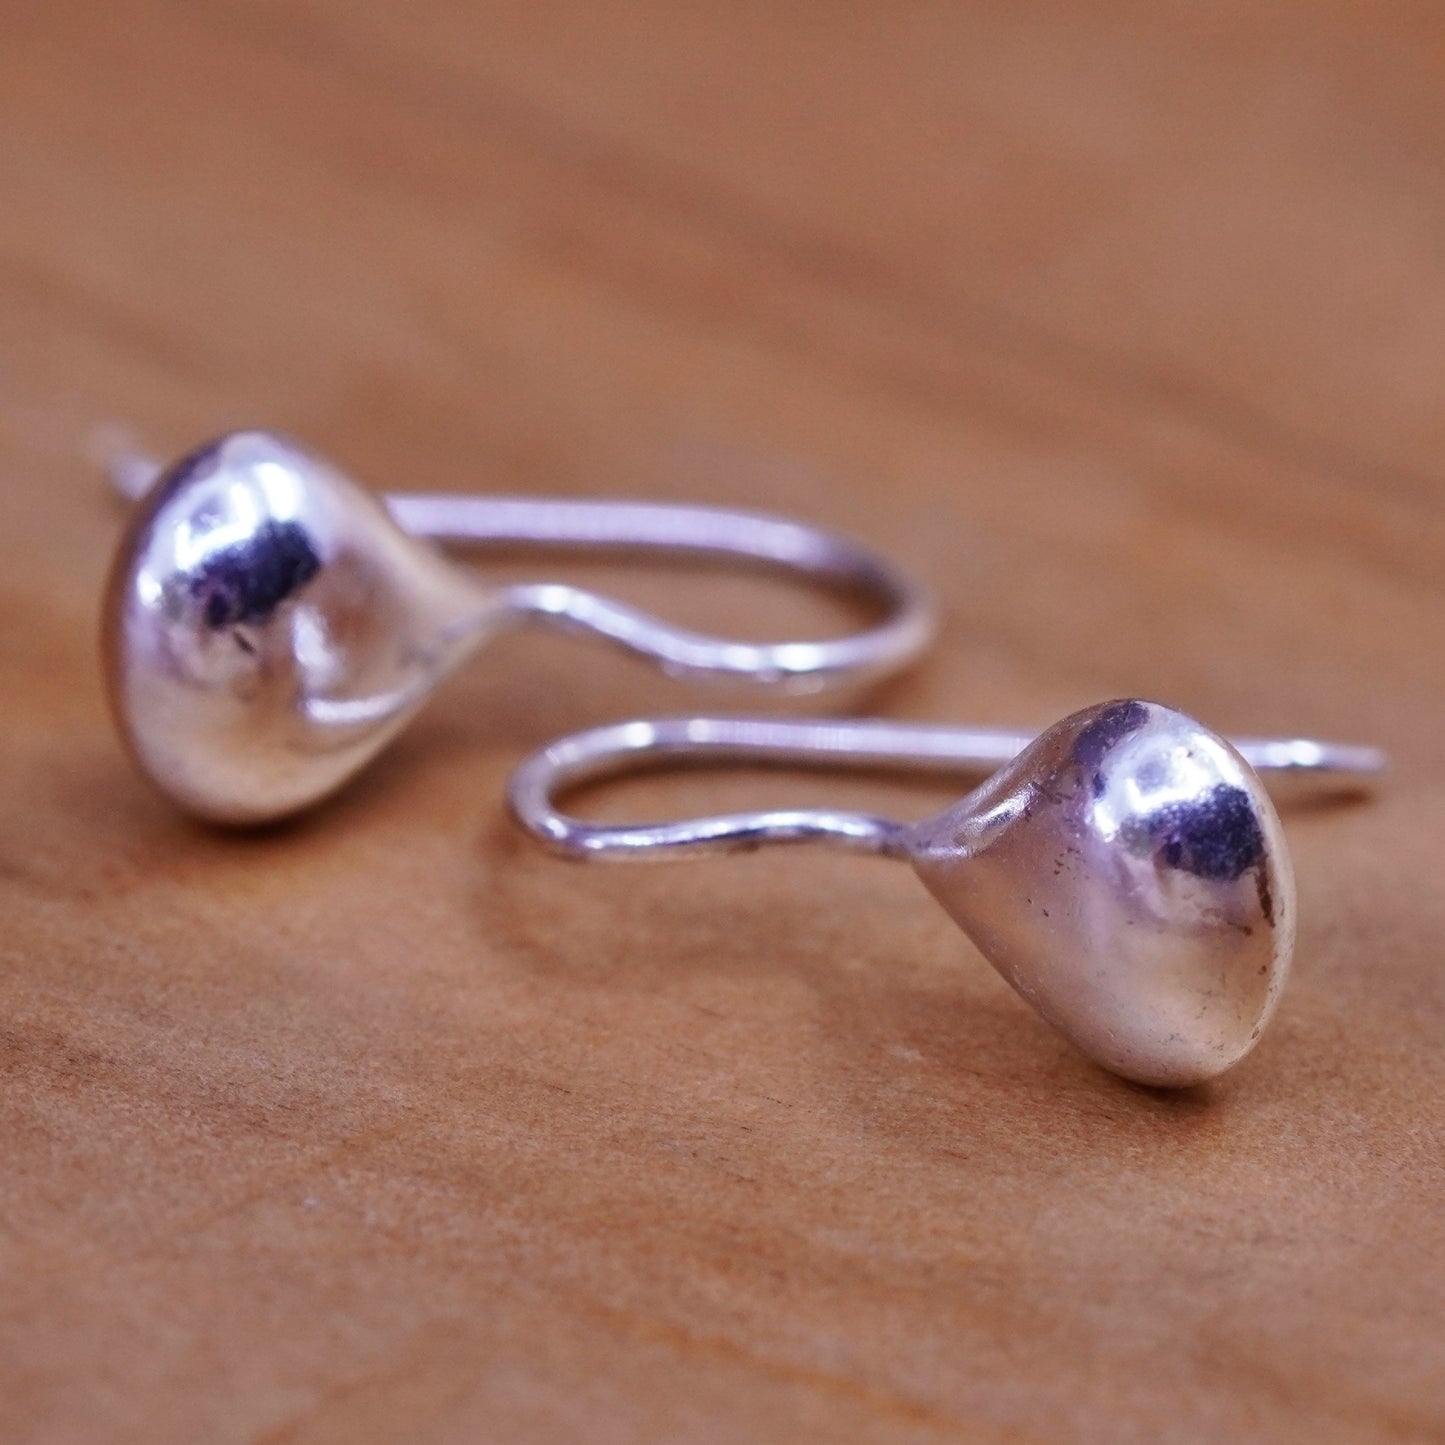 Vintage Sterling silver handmade earrings, Mexico 925 teardrop drops